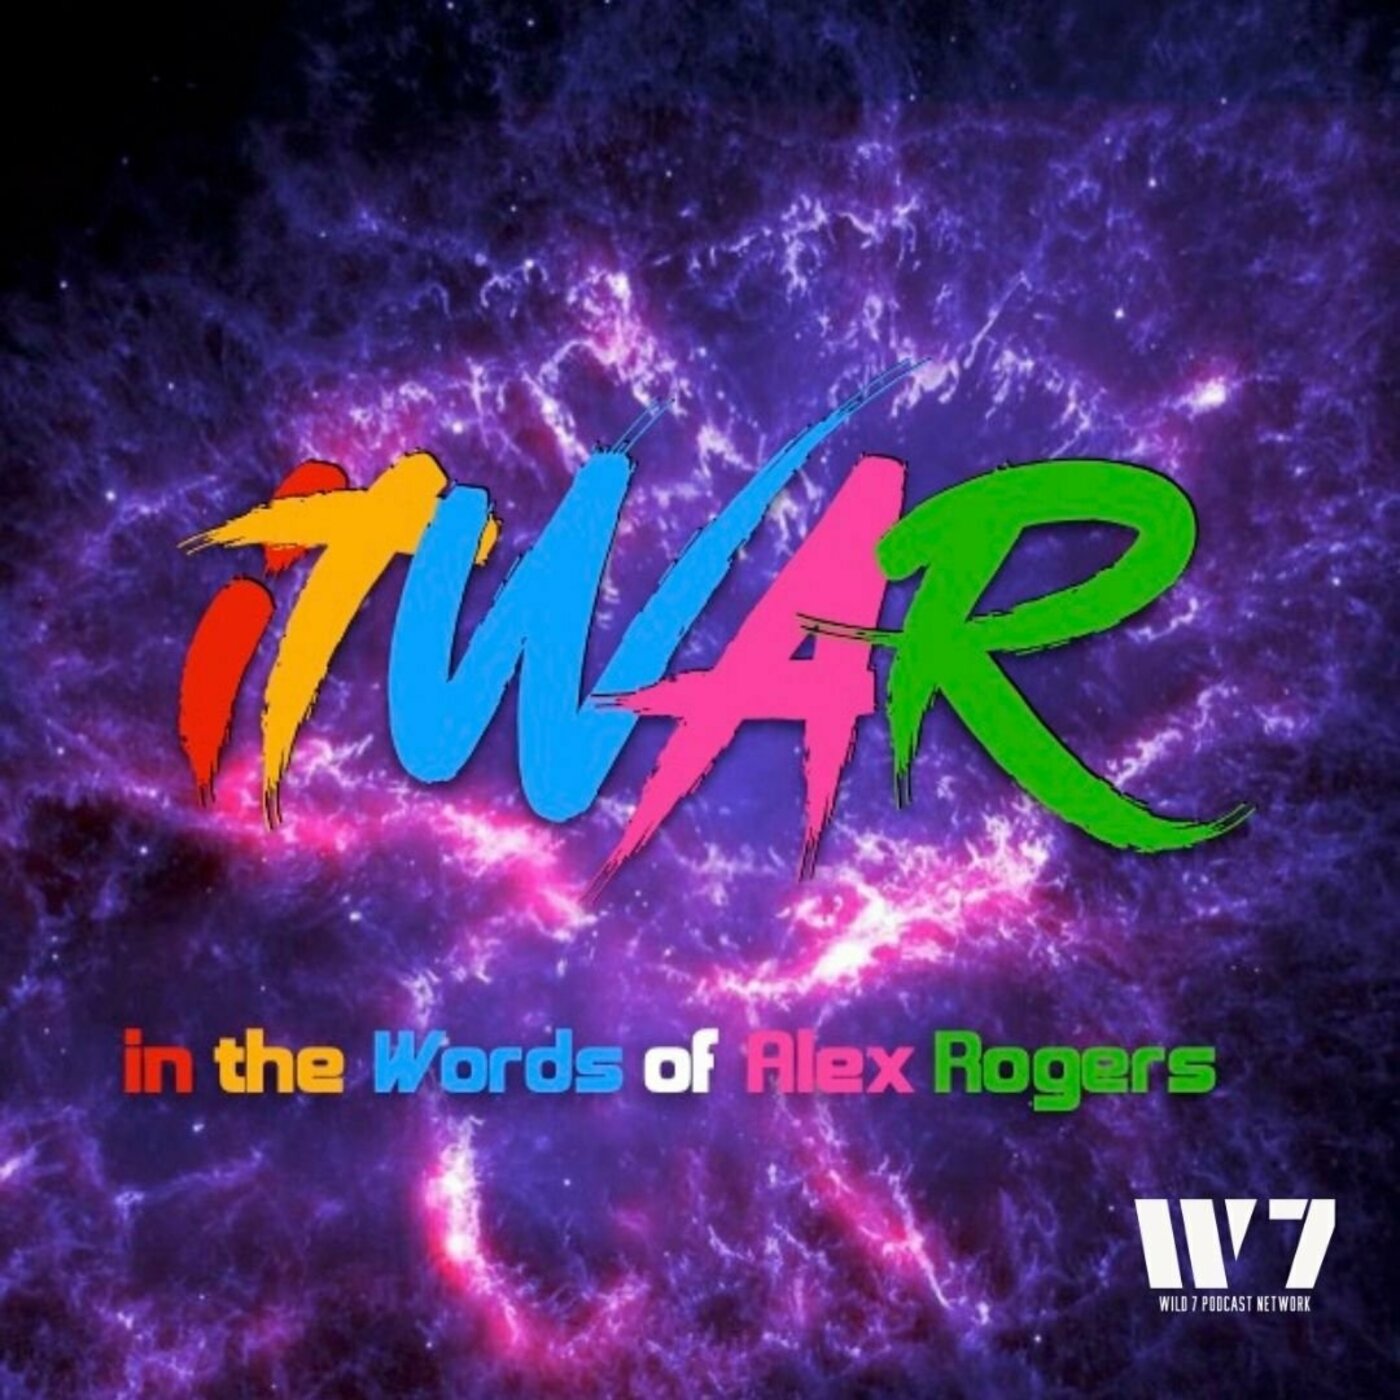 ITWAR - Episode 42: SHAFT WARS - In the Words of Alex Rogers